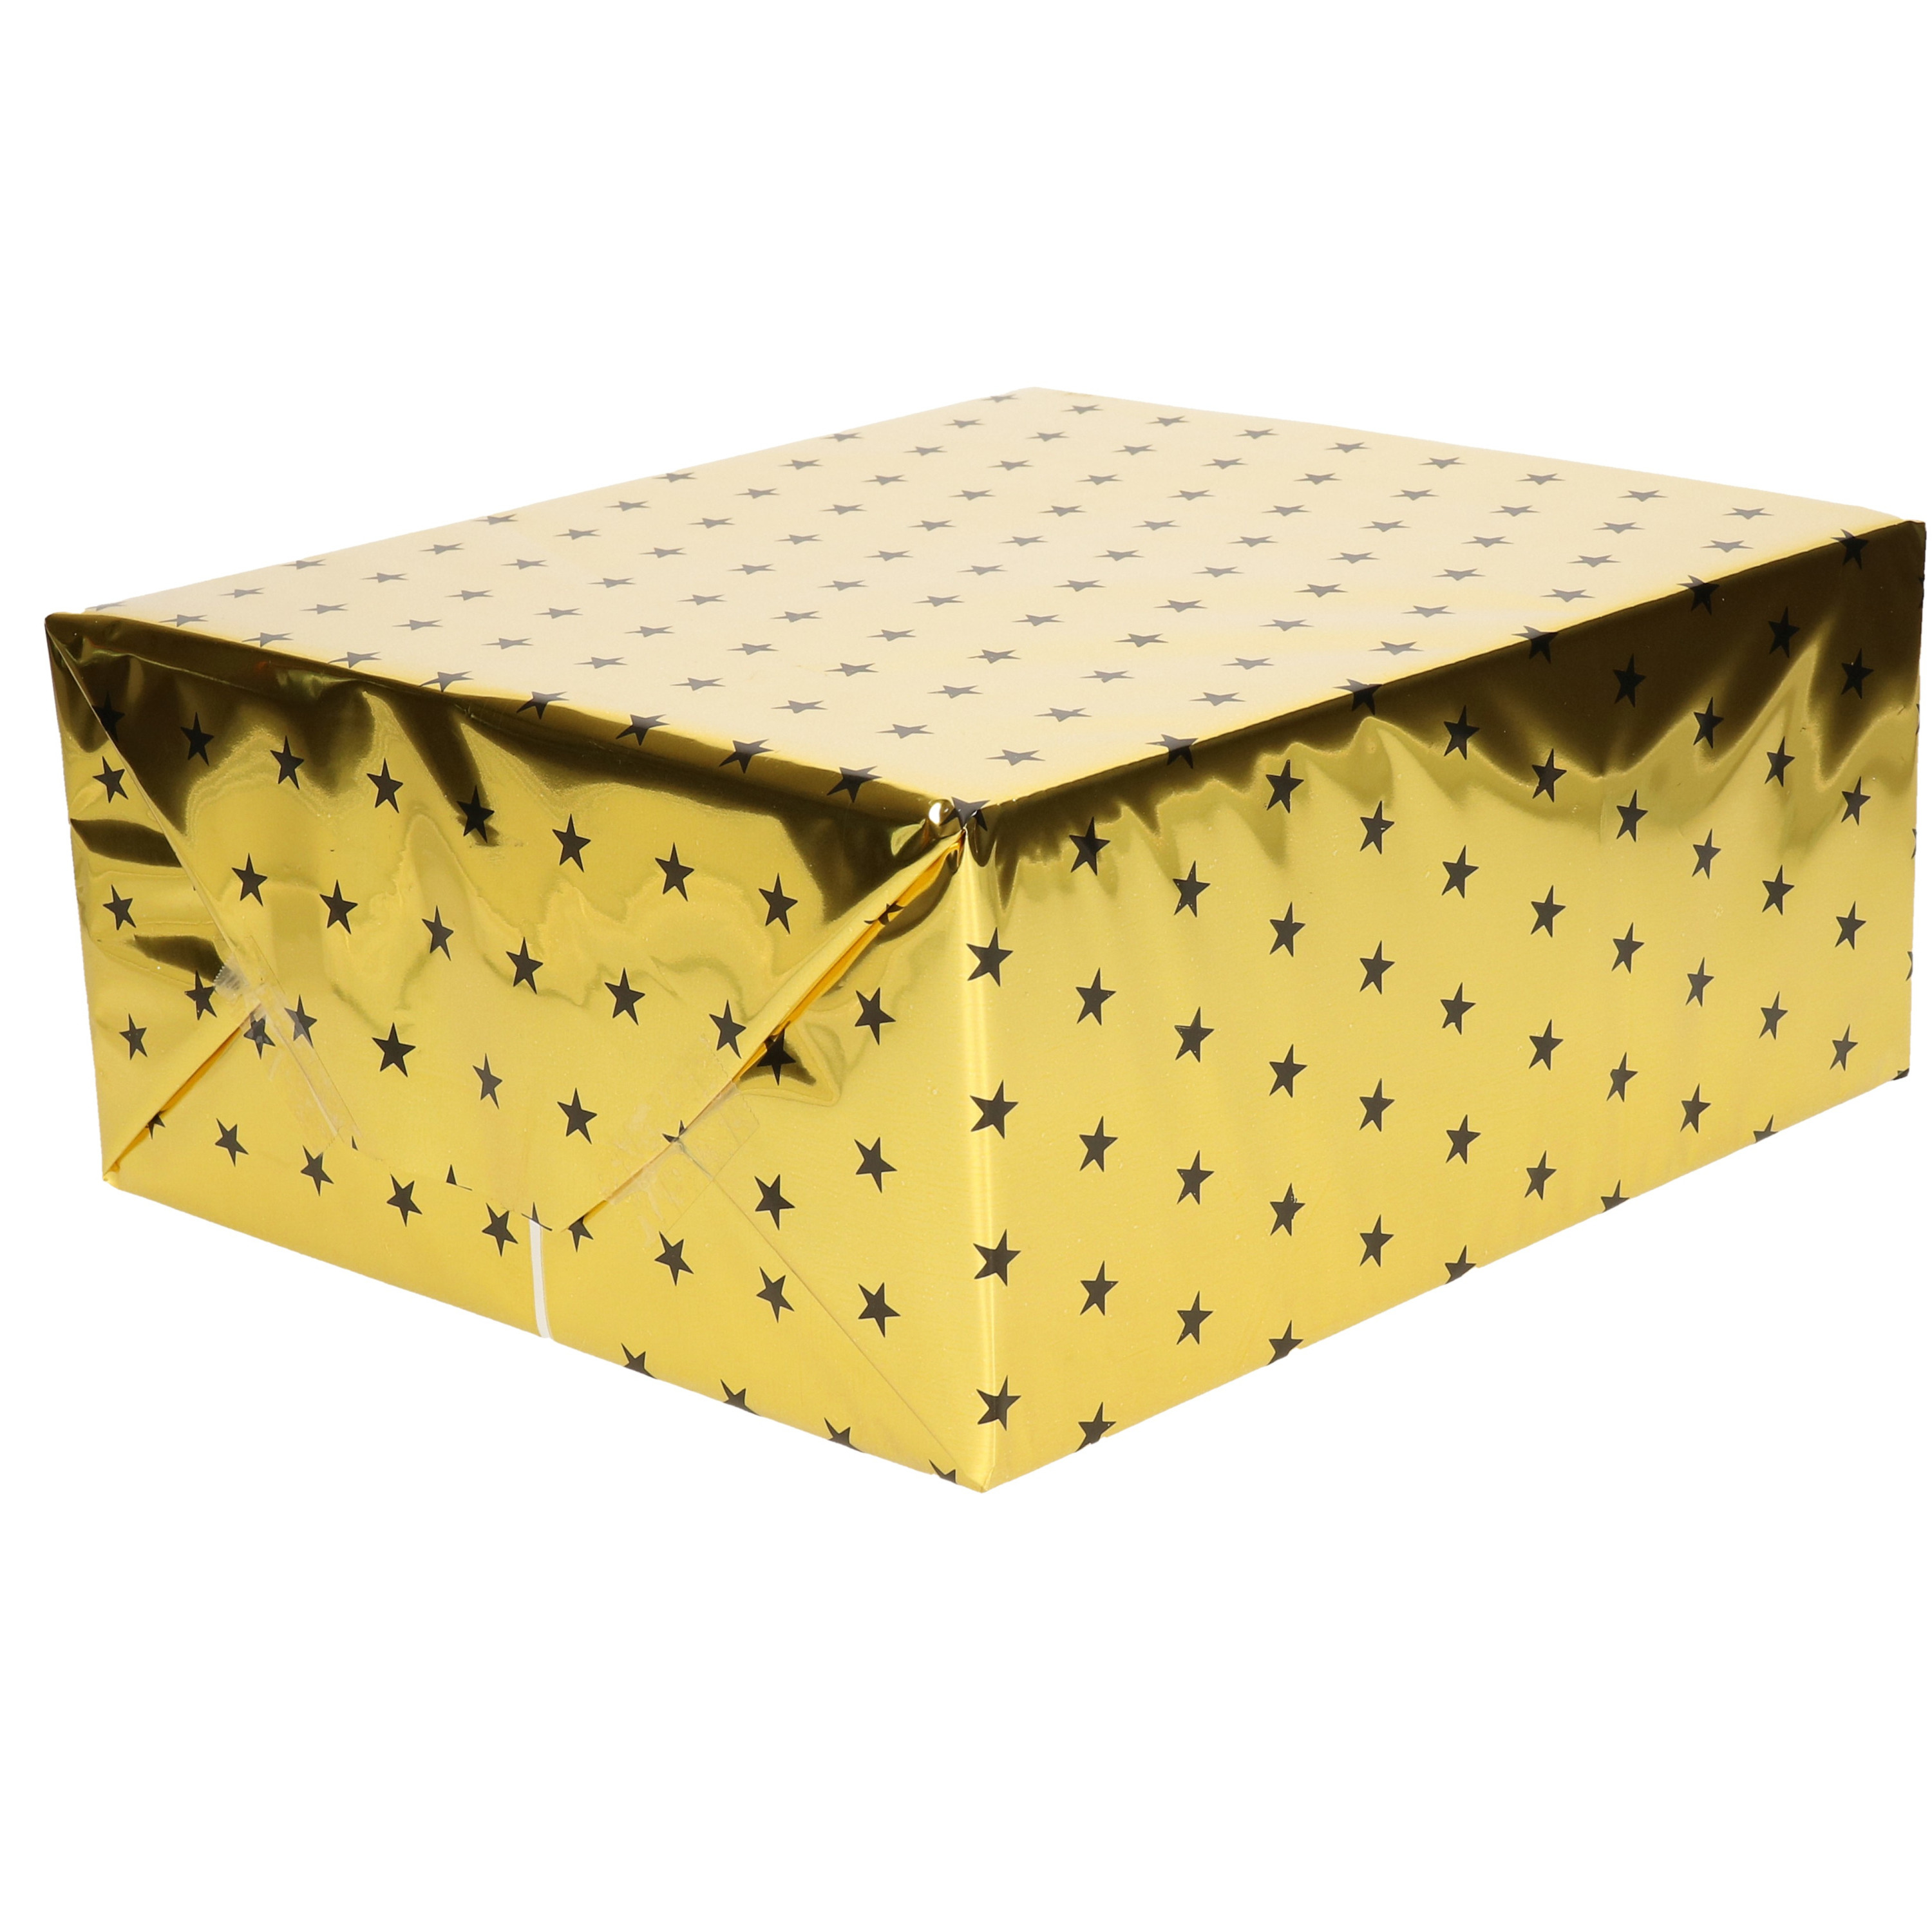 1x Rollen folie inpakpapier/cadeaupapier metallic goud/zwart met sterren 70 x 150 cm